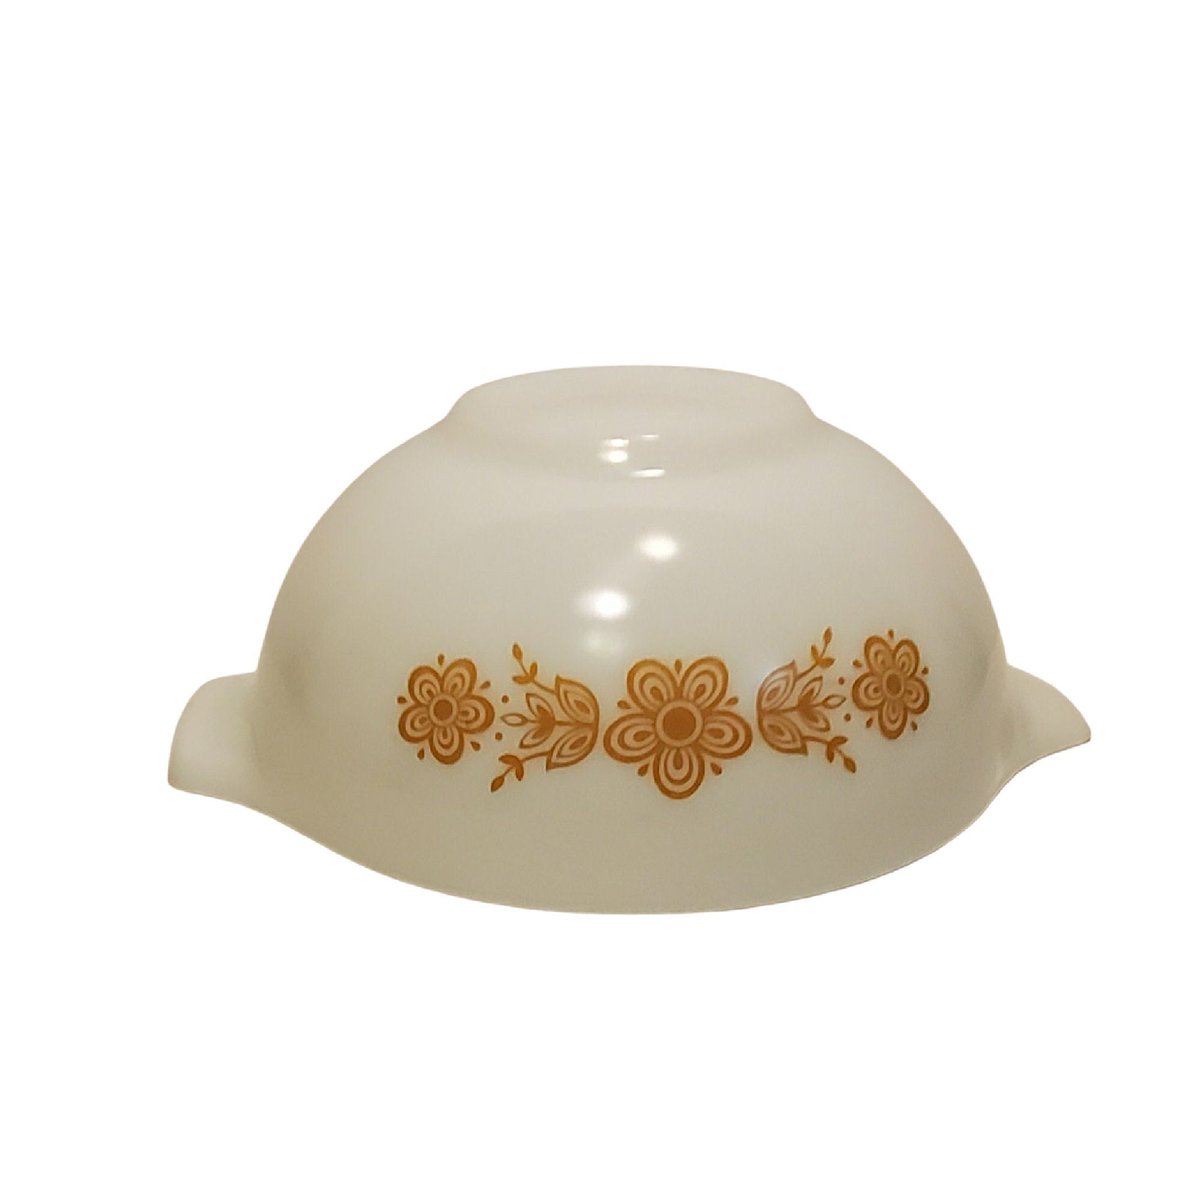 Pyrex Butterfly Gold Cinderella Bowl 443  2.5 qt, Free Shipping tuppu.net/2c9a5823 #JunkYardBlonde #Etsy #VintagePyrex